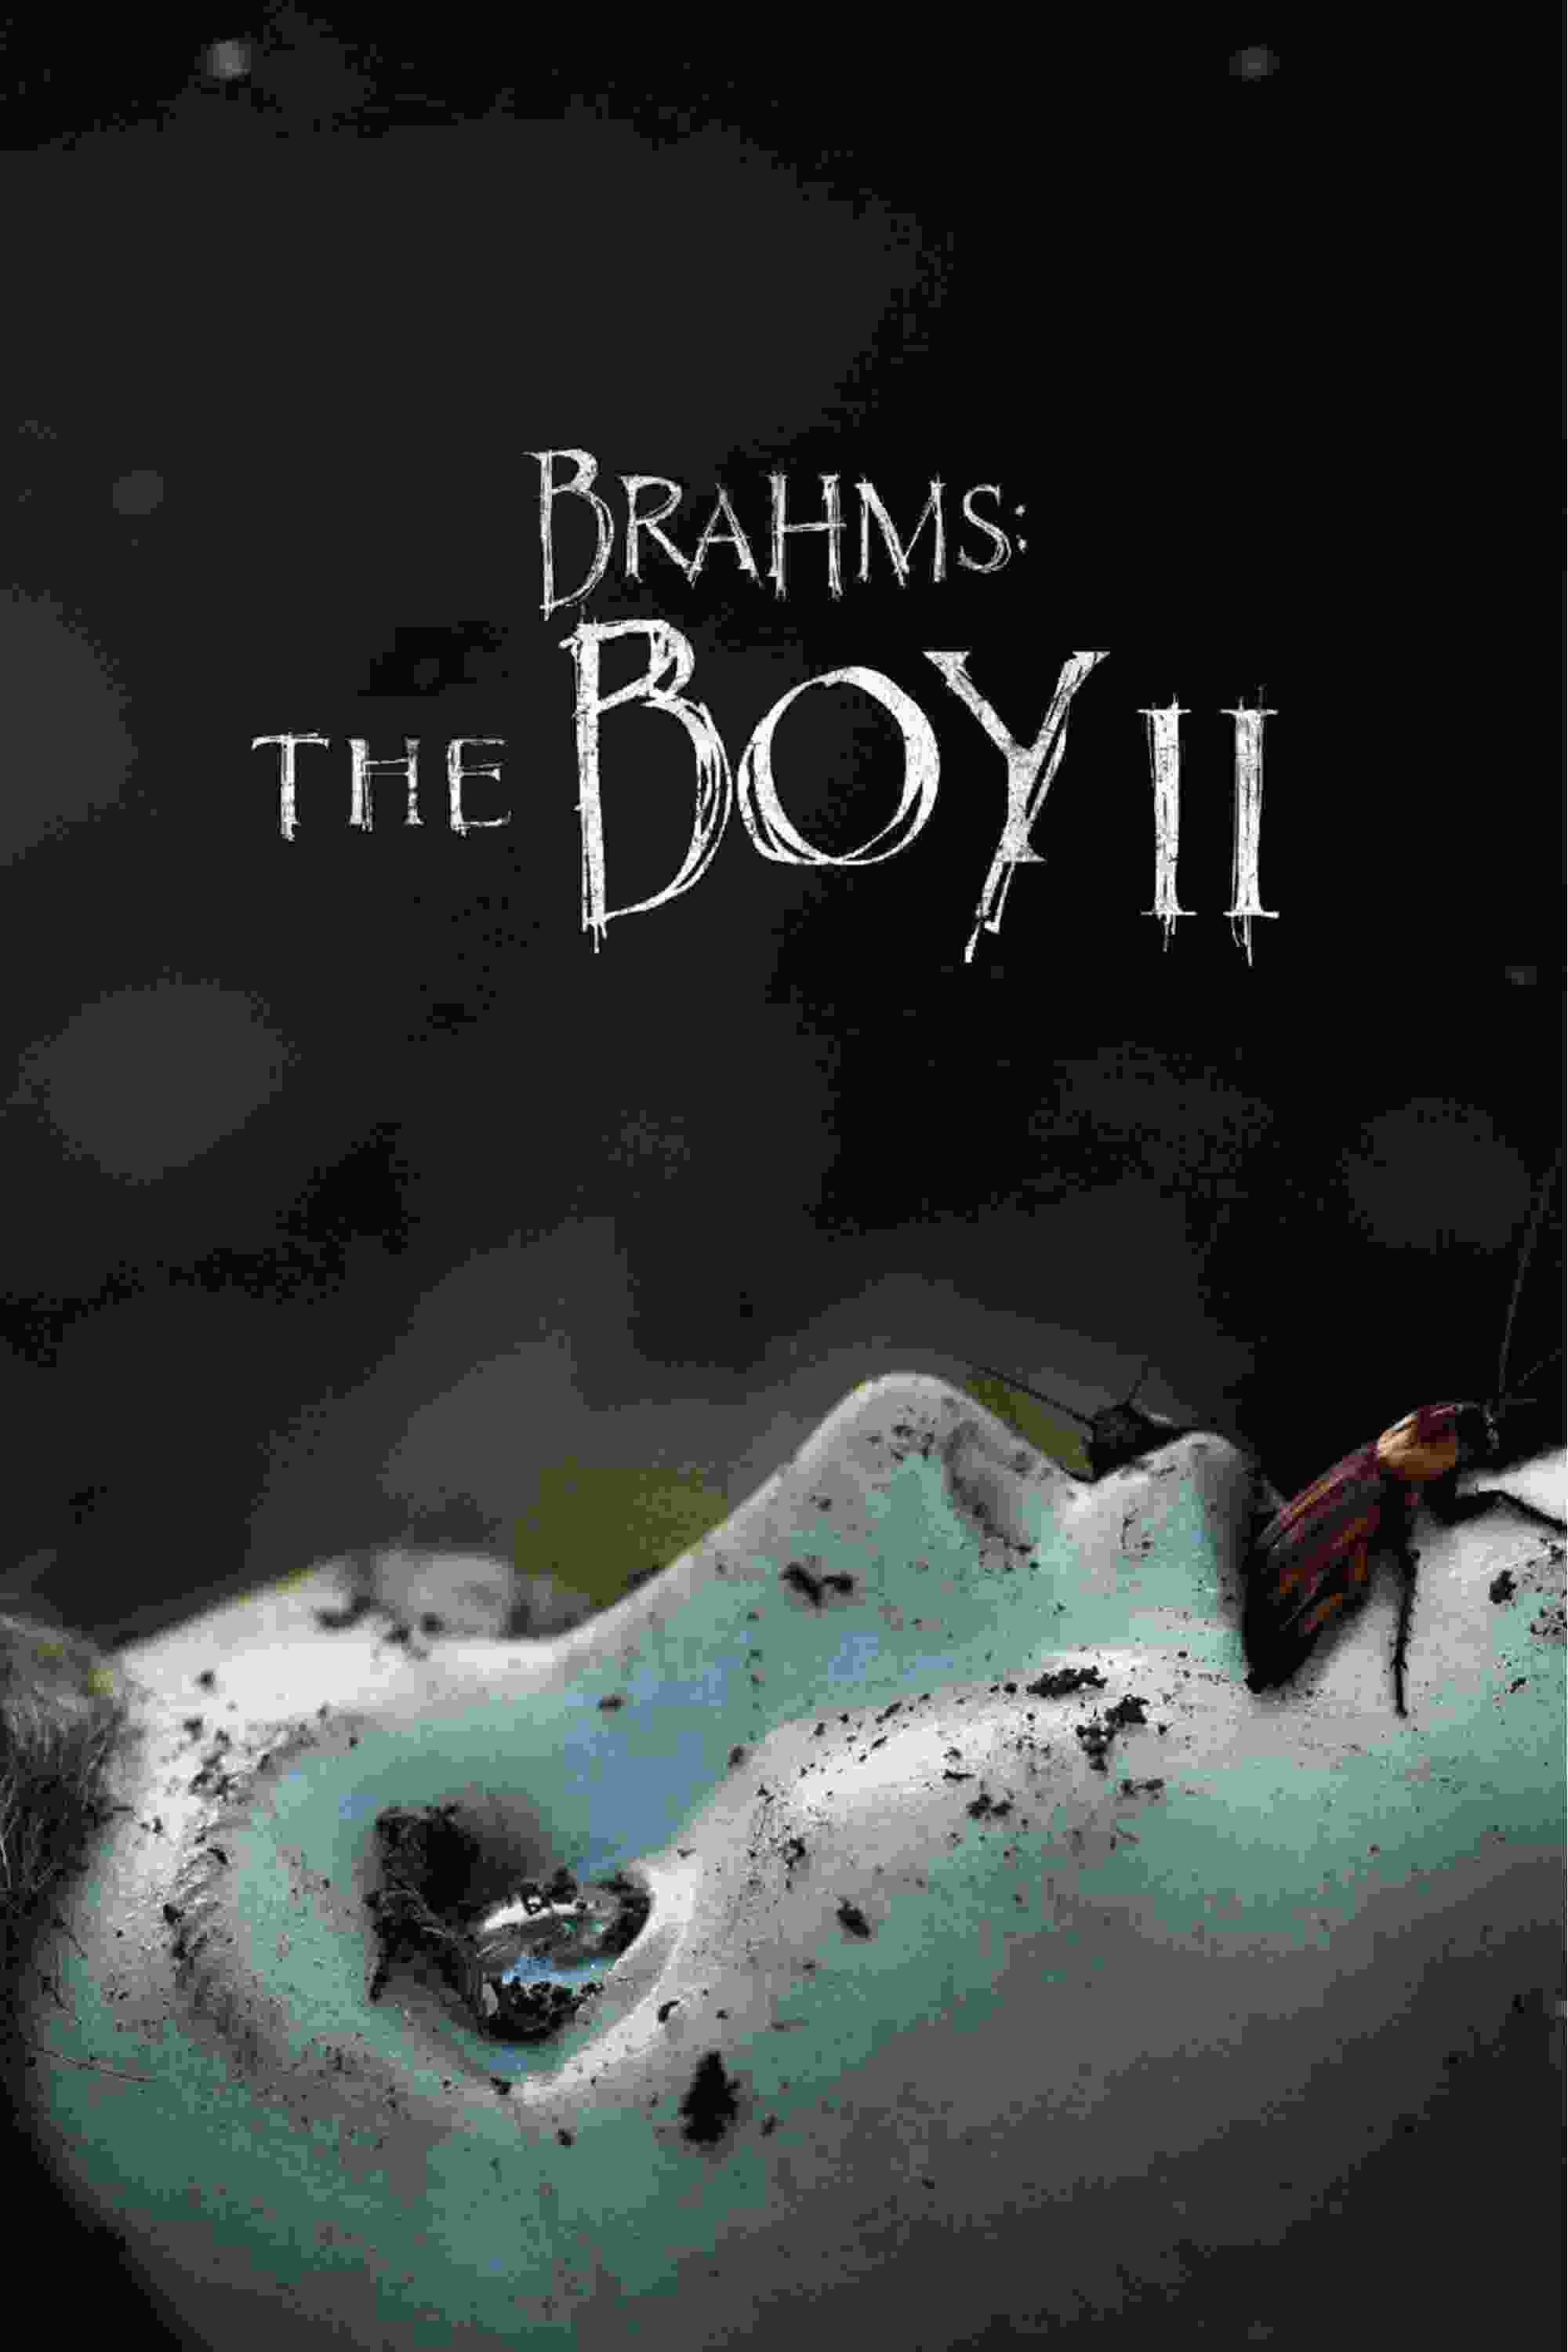 Brahms: The Boy II (2020) Katie Holmes